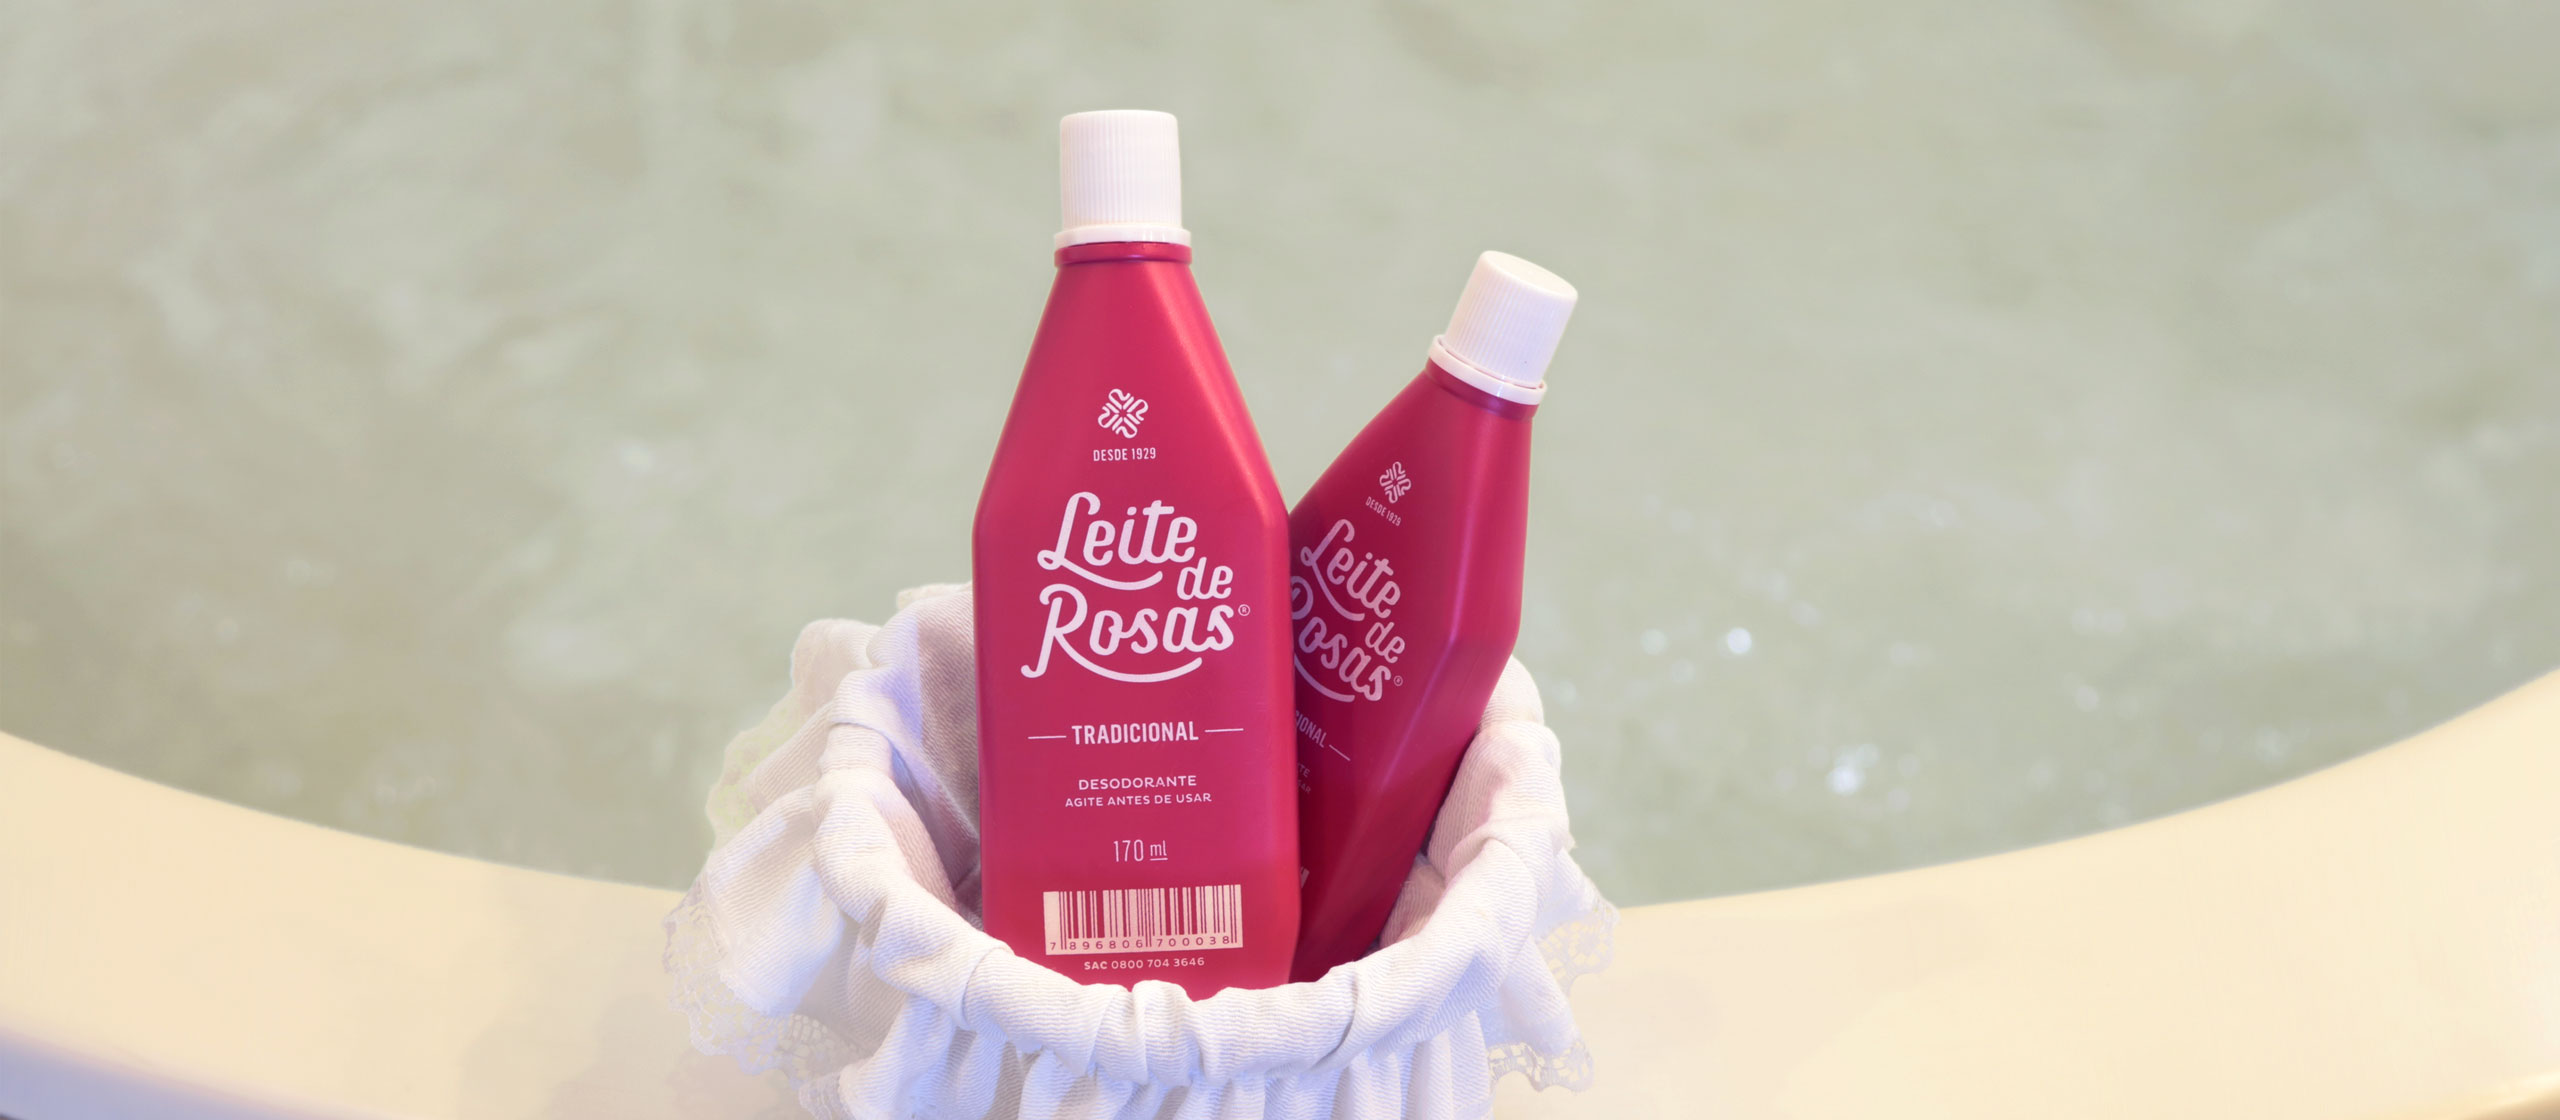 Leite de Rosas - Desodorante roll-on